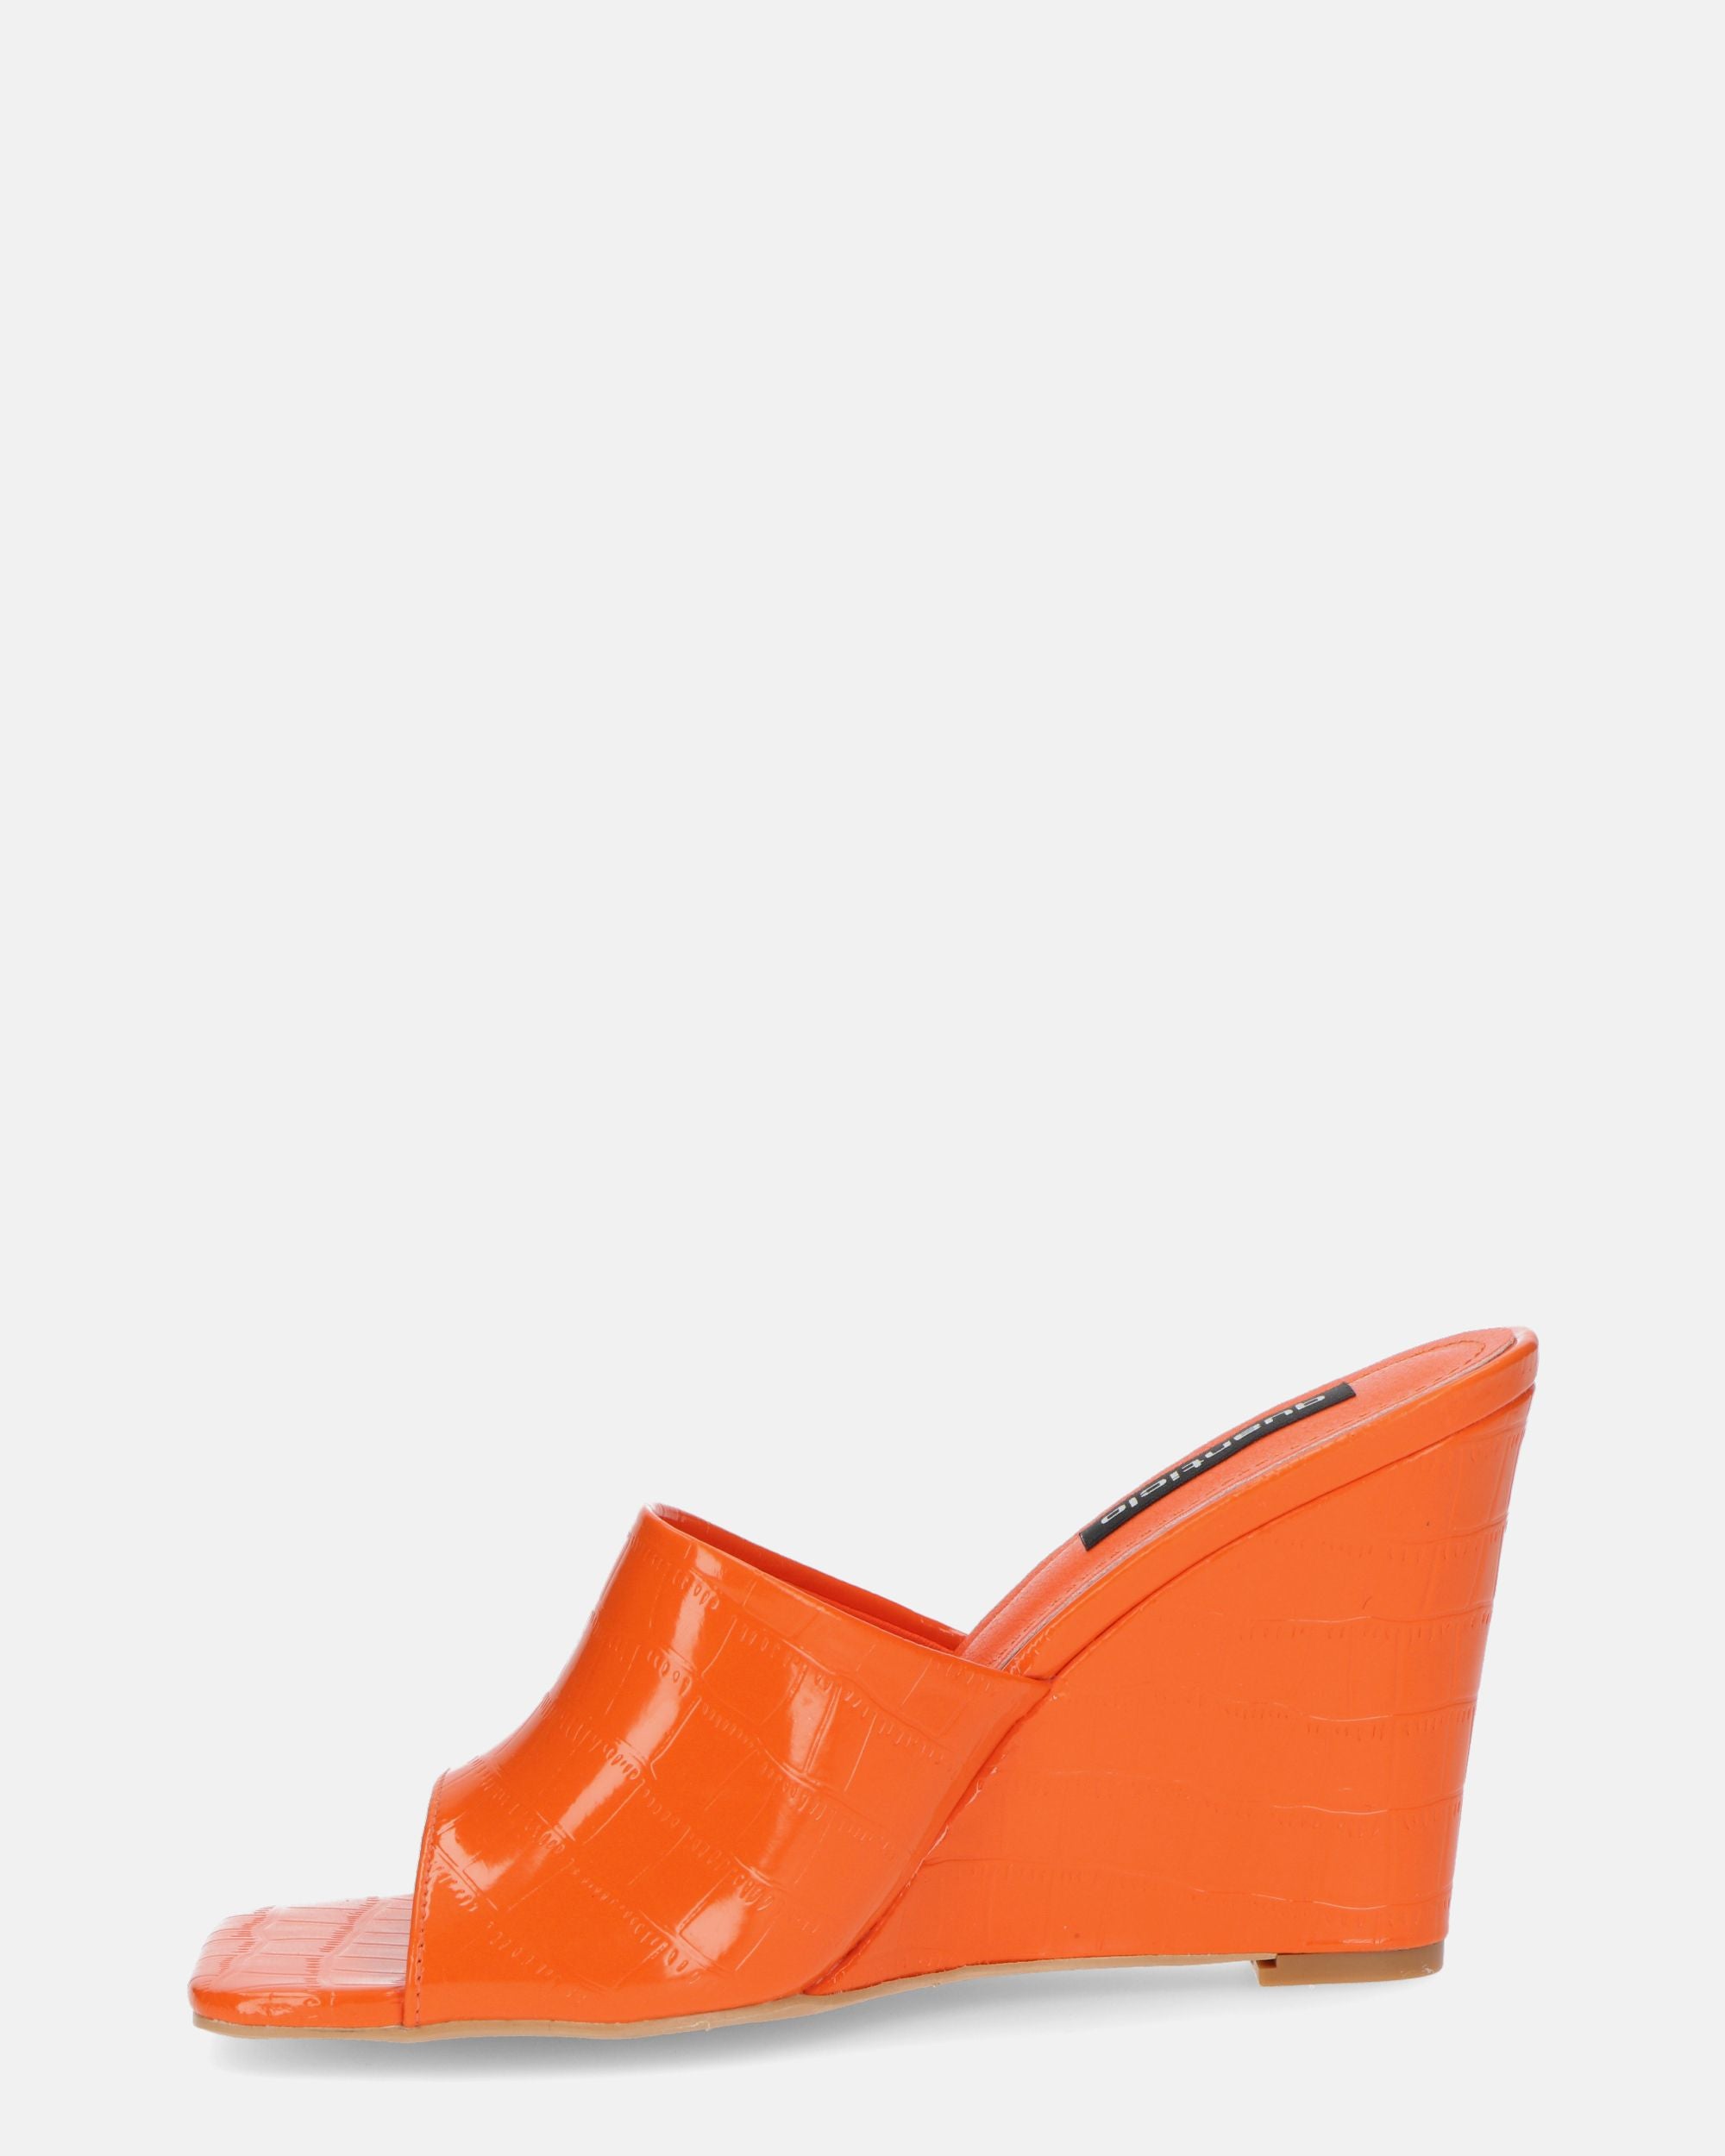 MARGHERITA - wedge sandals in glassy orange crocodile